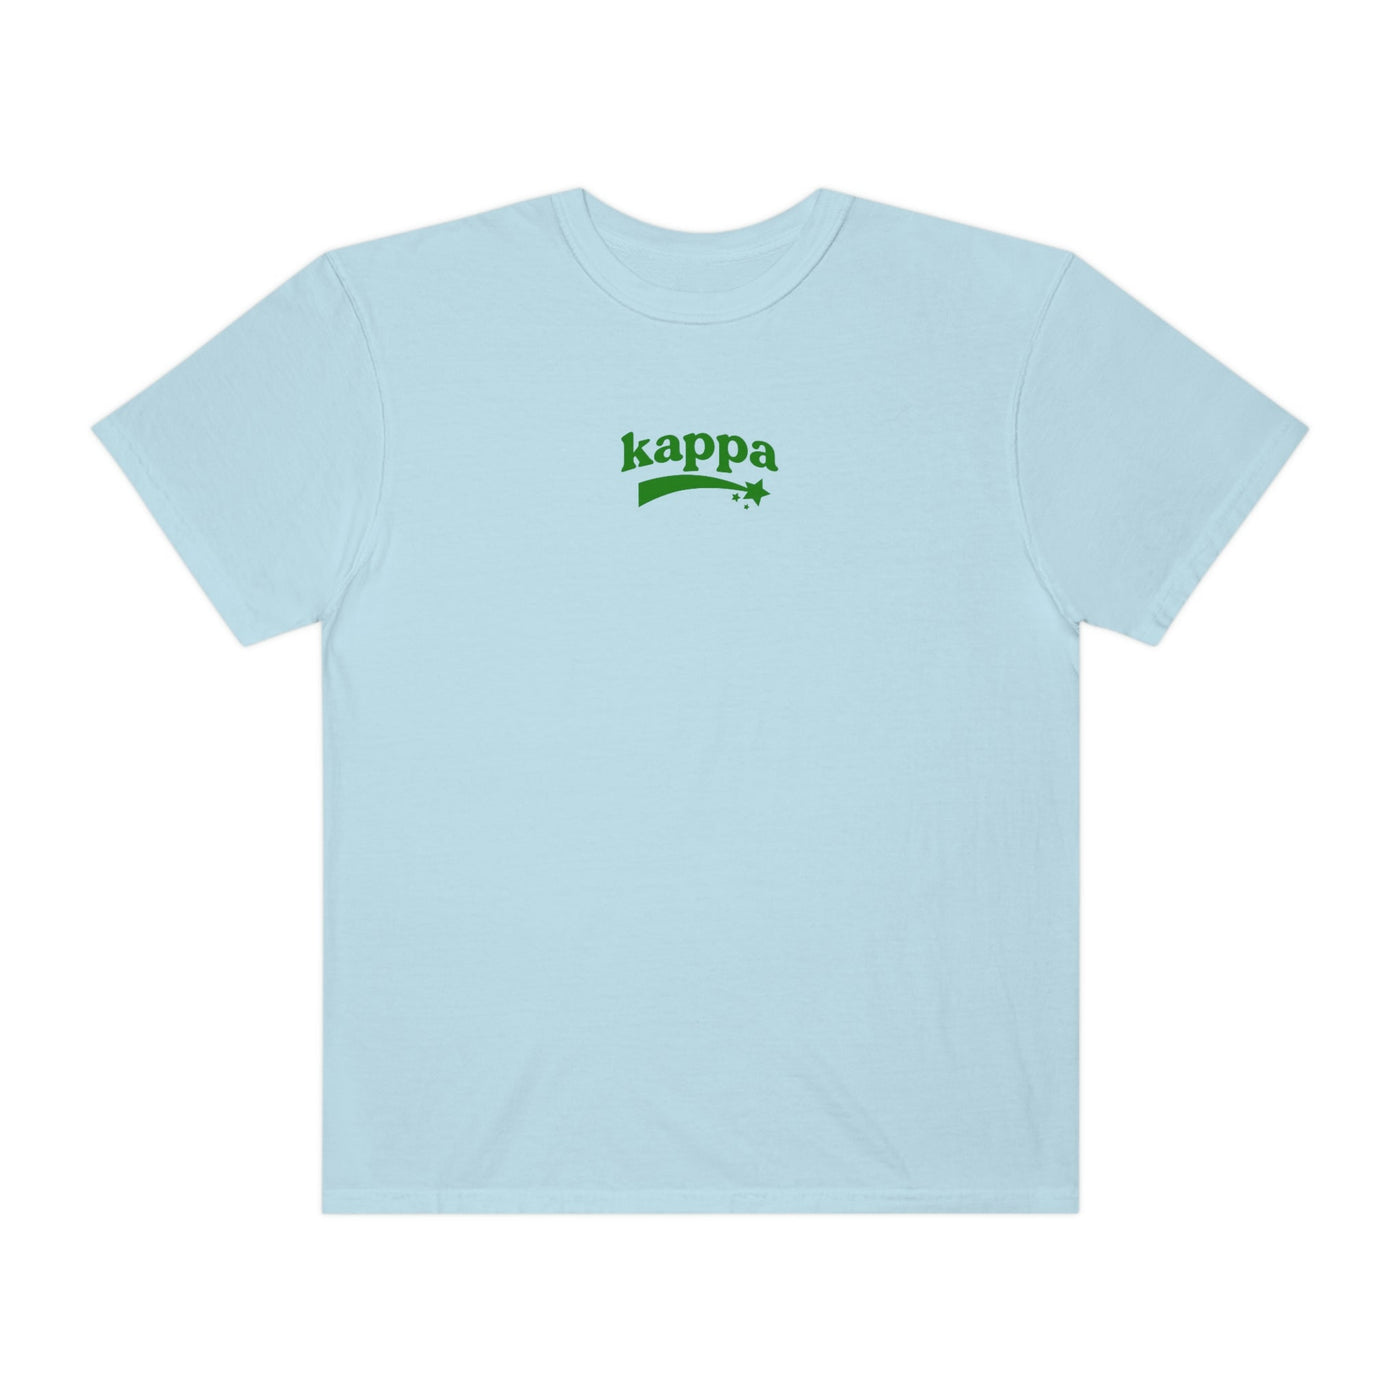 Kappa Kappa Gamma Planet T-shirt | Be Kind to the Planet Trendy Sorority shirt